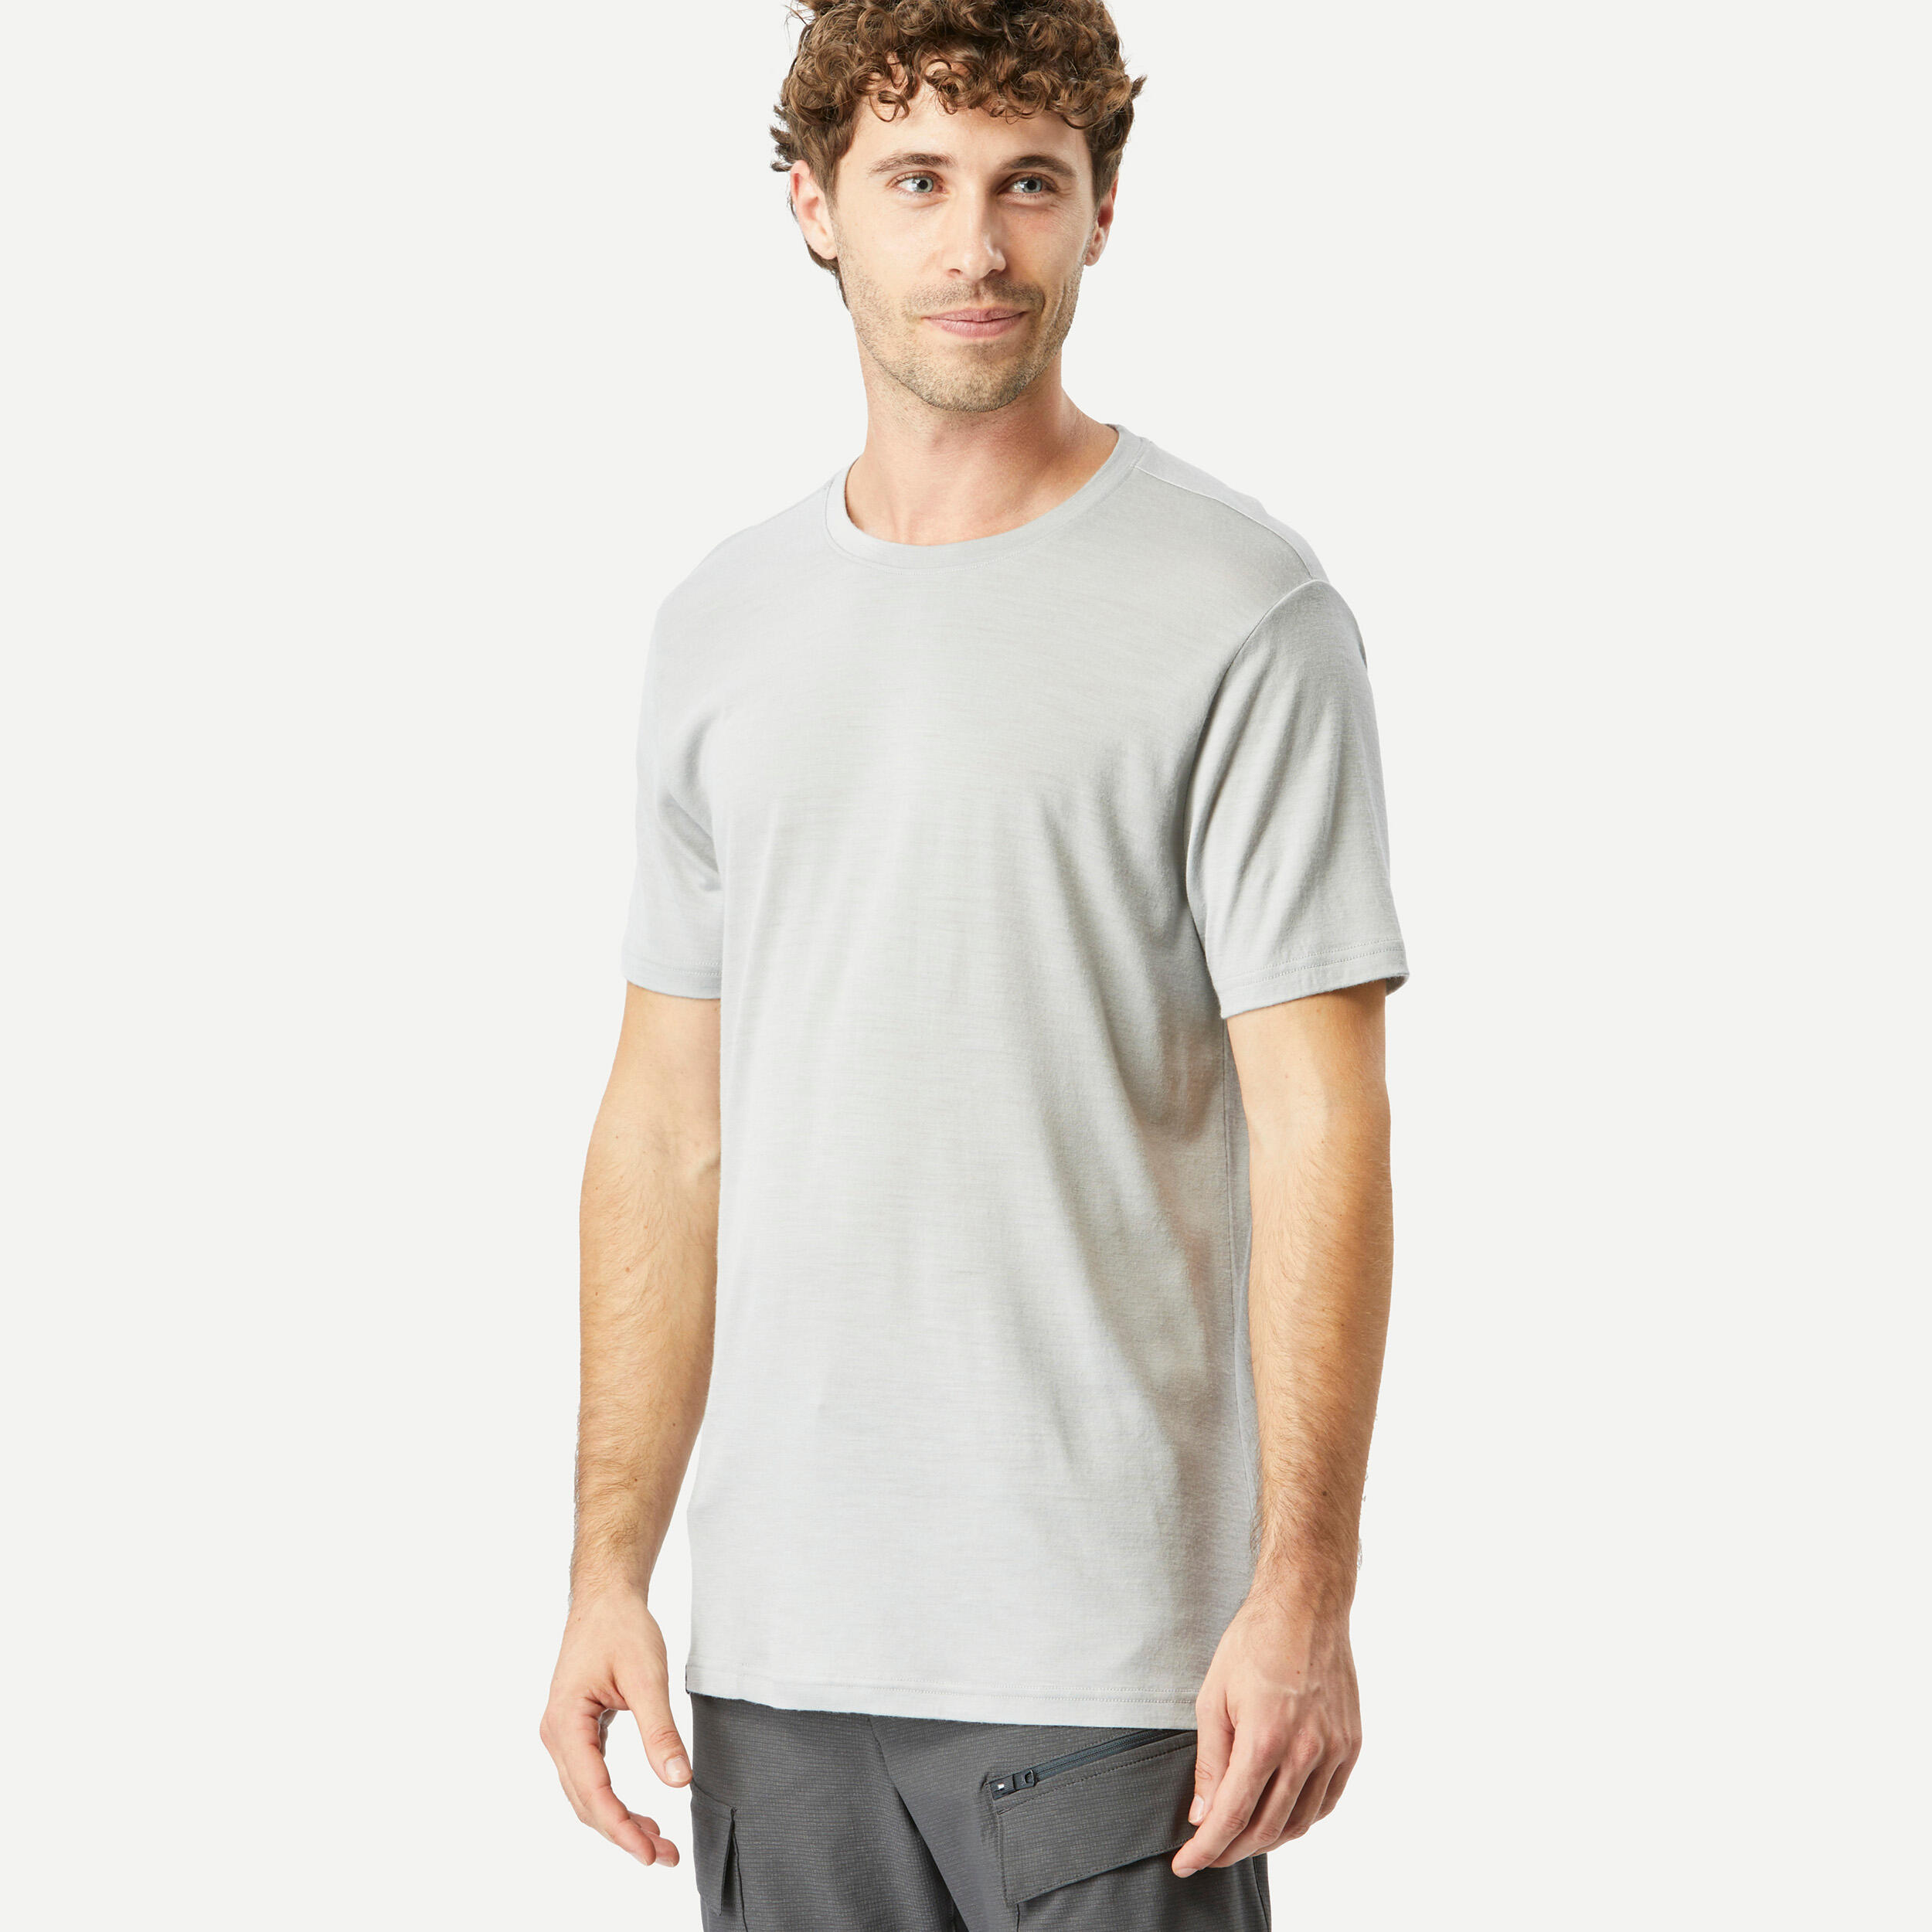 FORCLAZ Men’s short-sleeved Merino wool hiking travel t-shirt - TRAVEL 500 grey